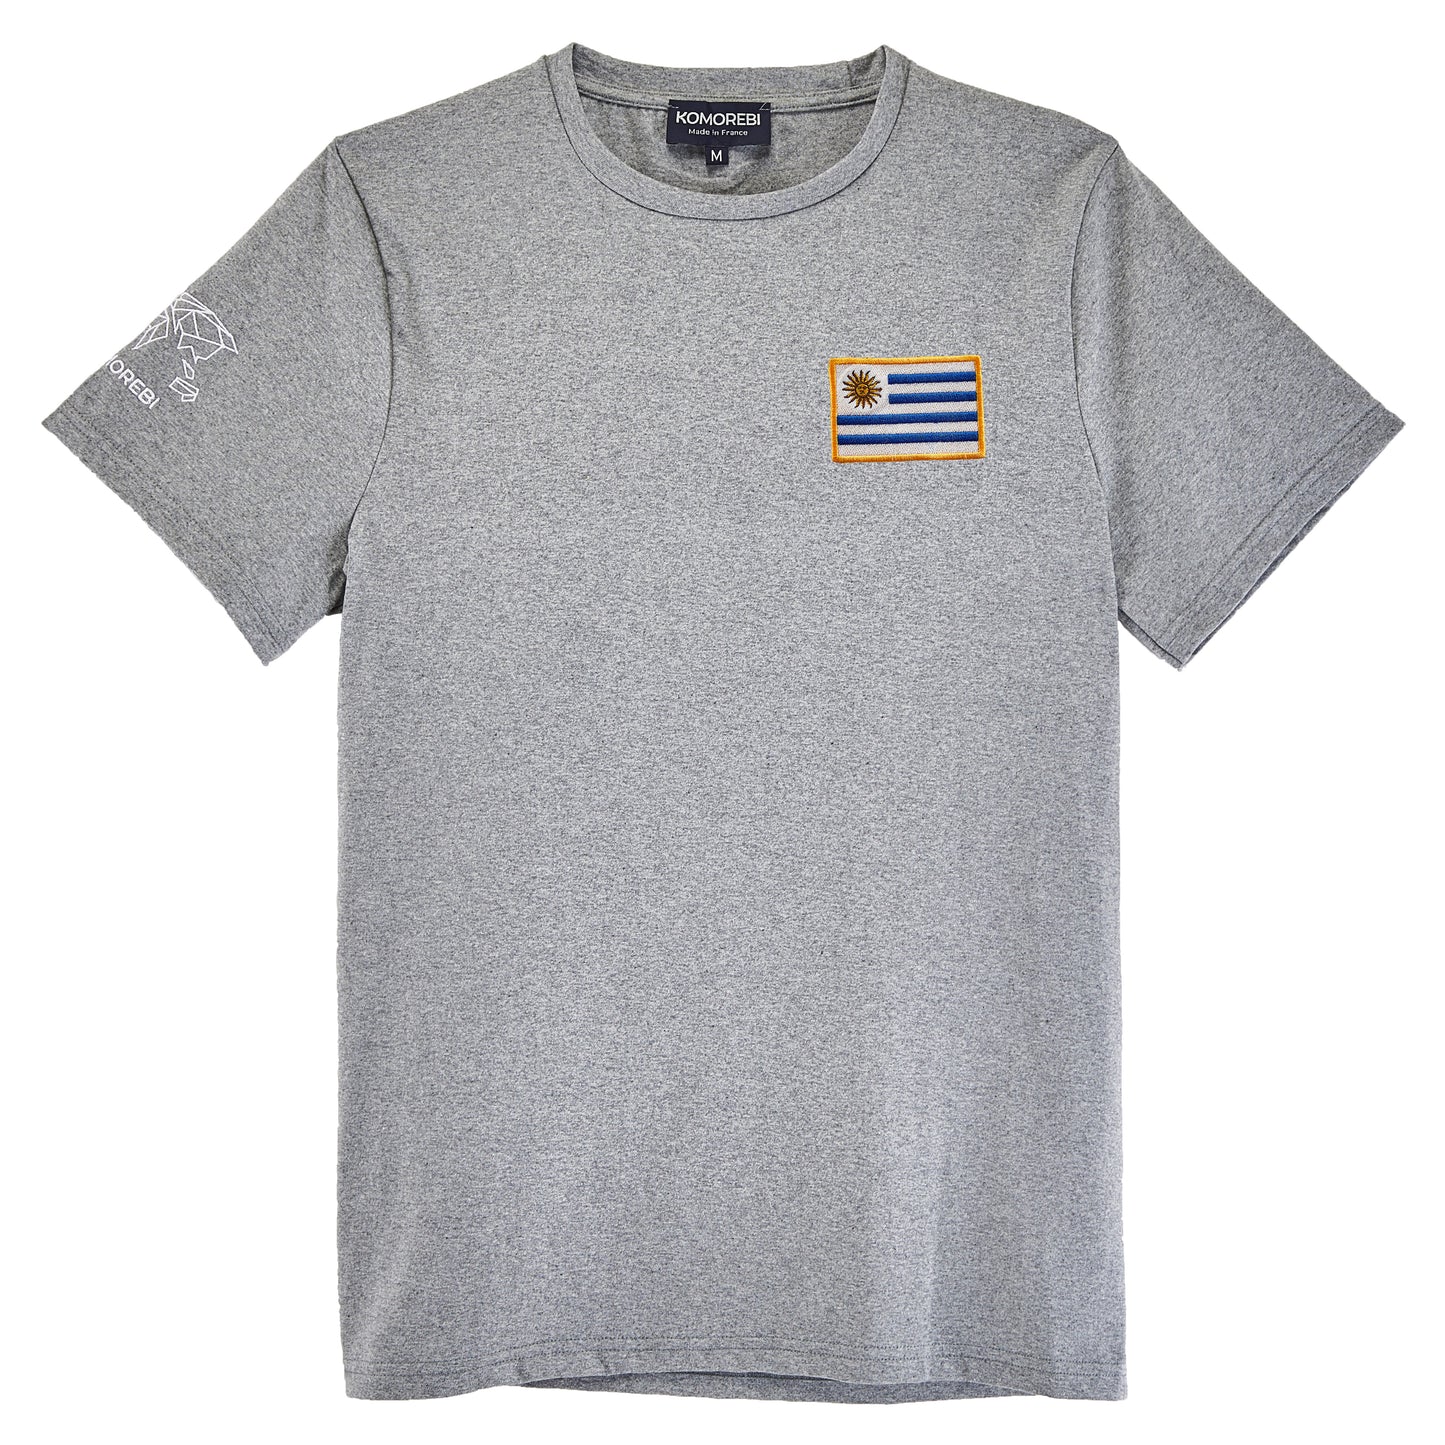 Uruguay - flag t-shirt